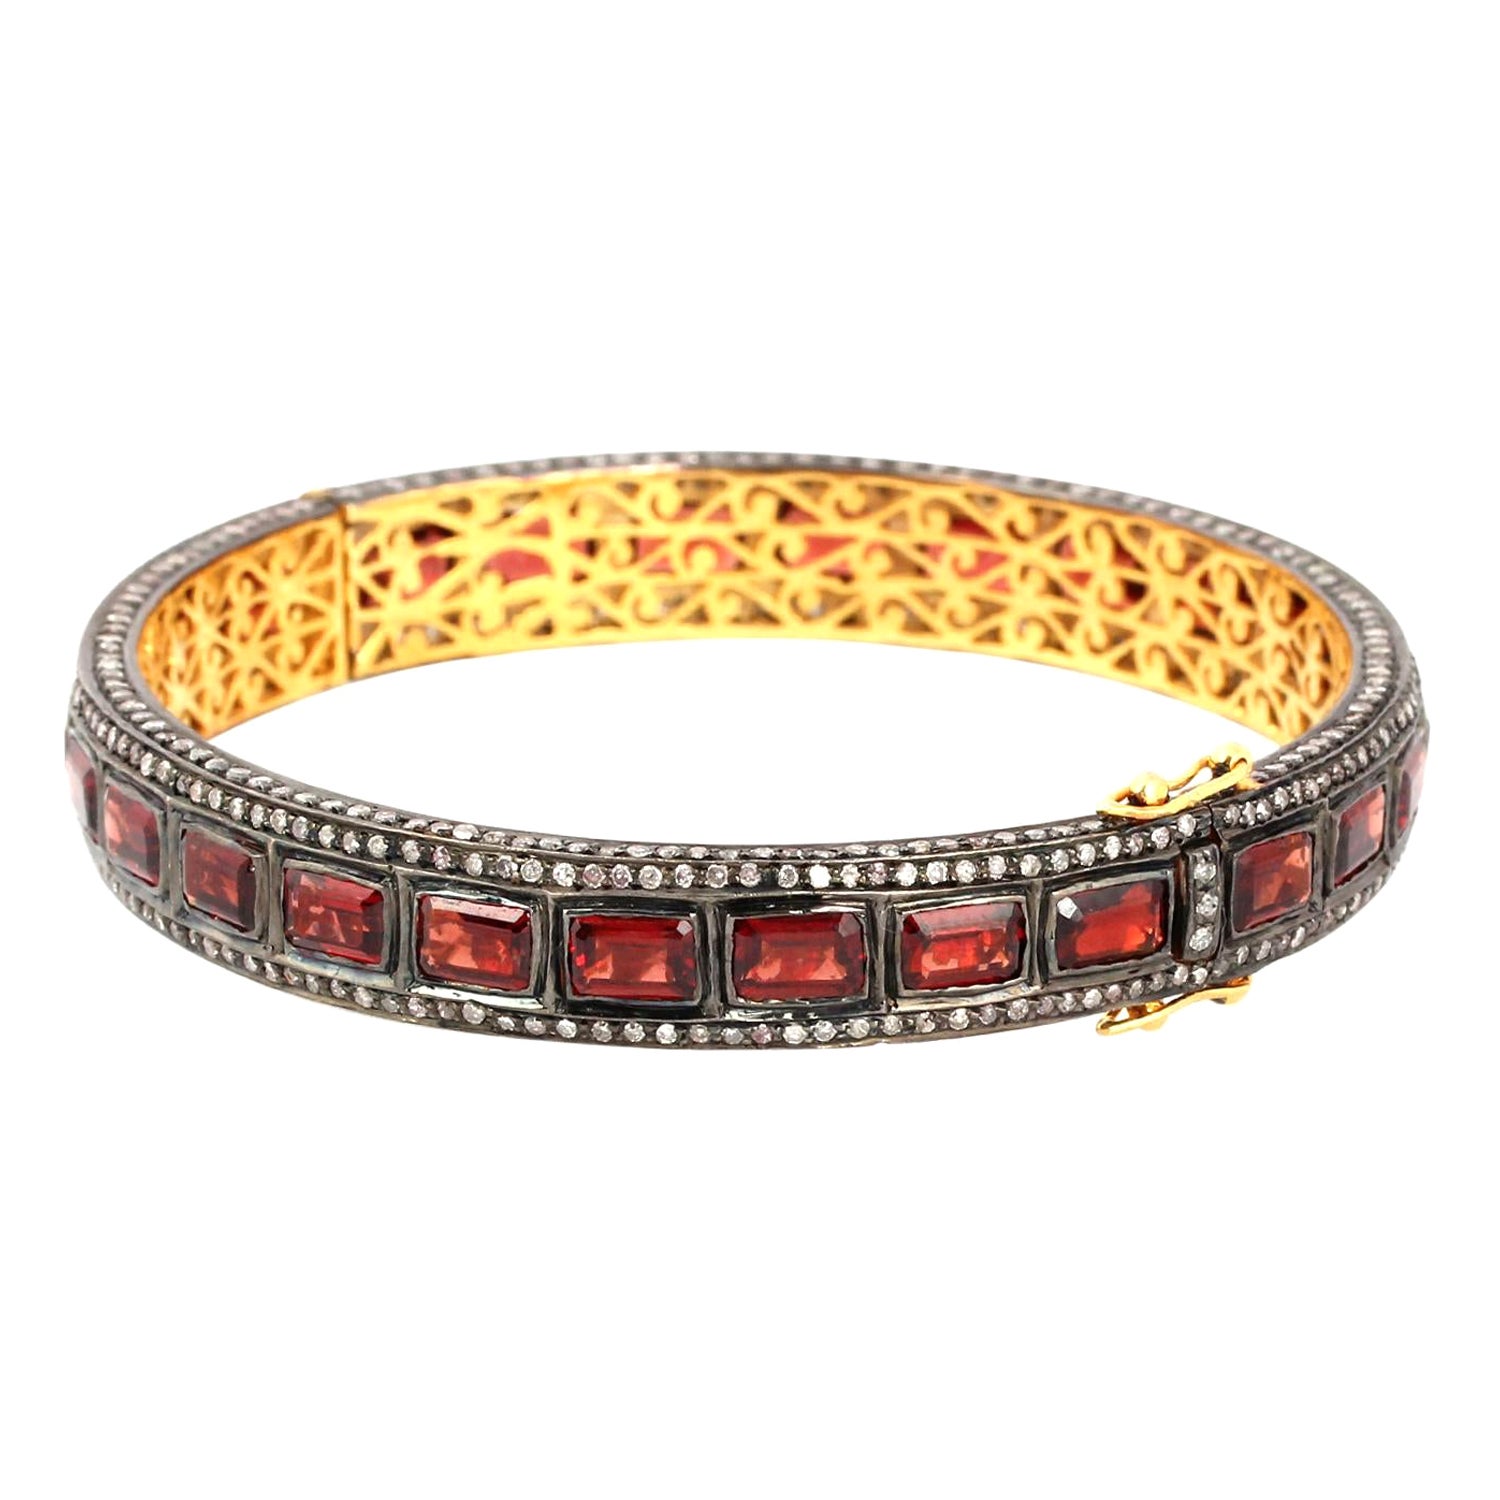 Designer Bracelet With Red Garnet Octogen Stone Surrounded by Pave Diamonds